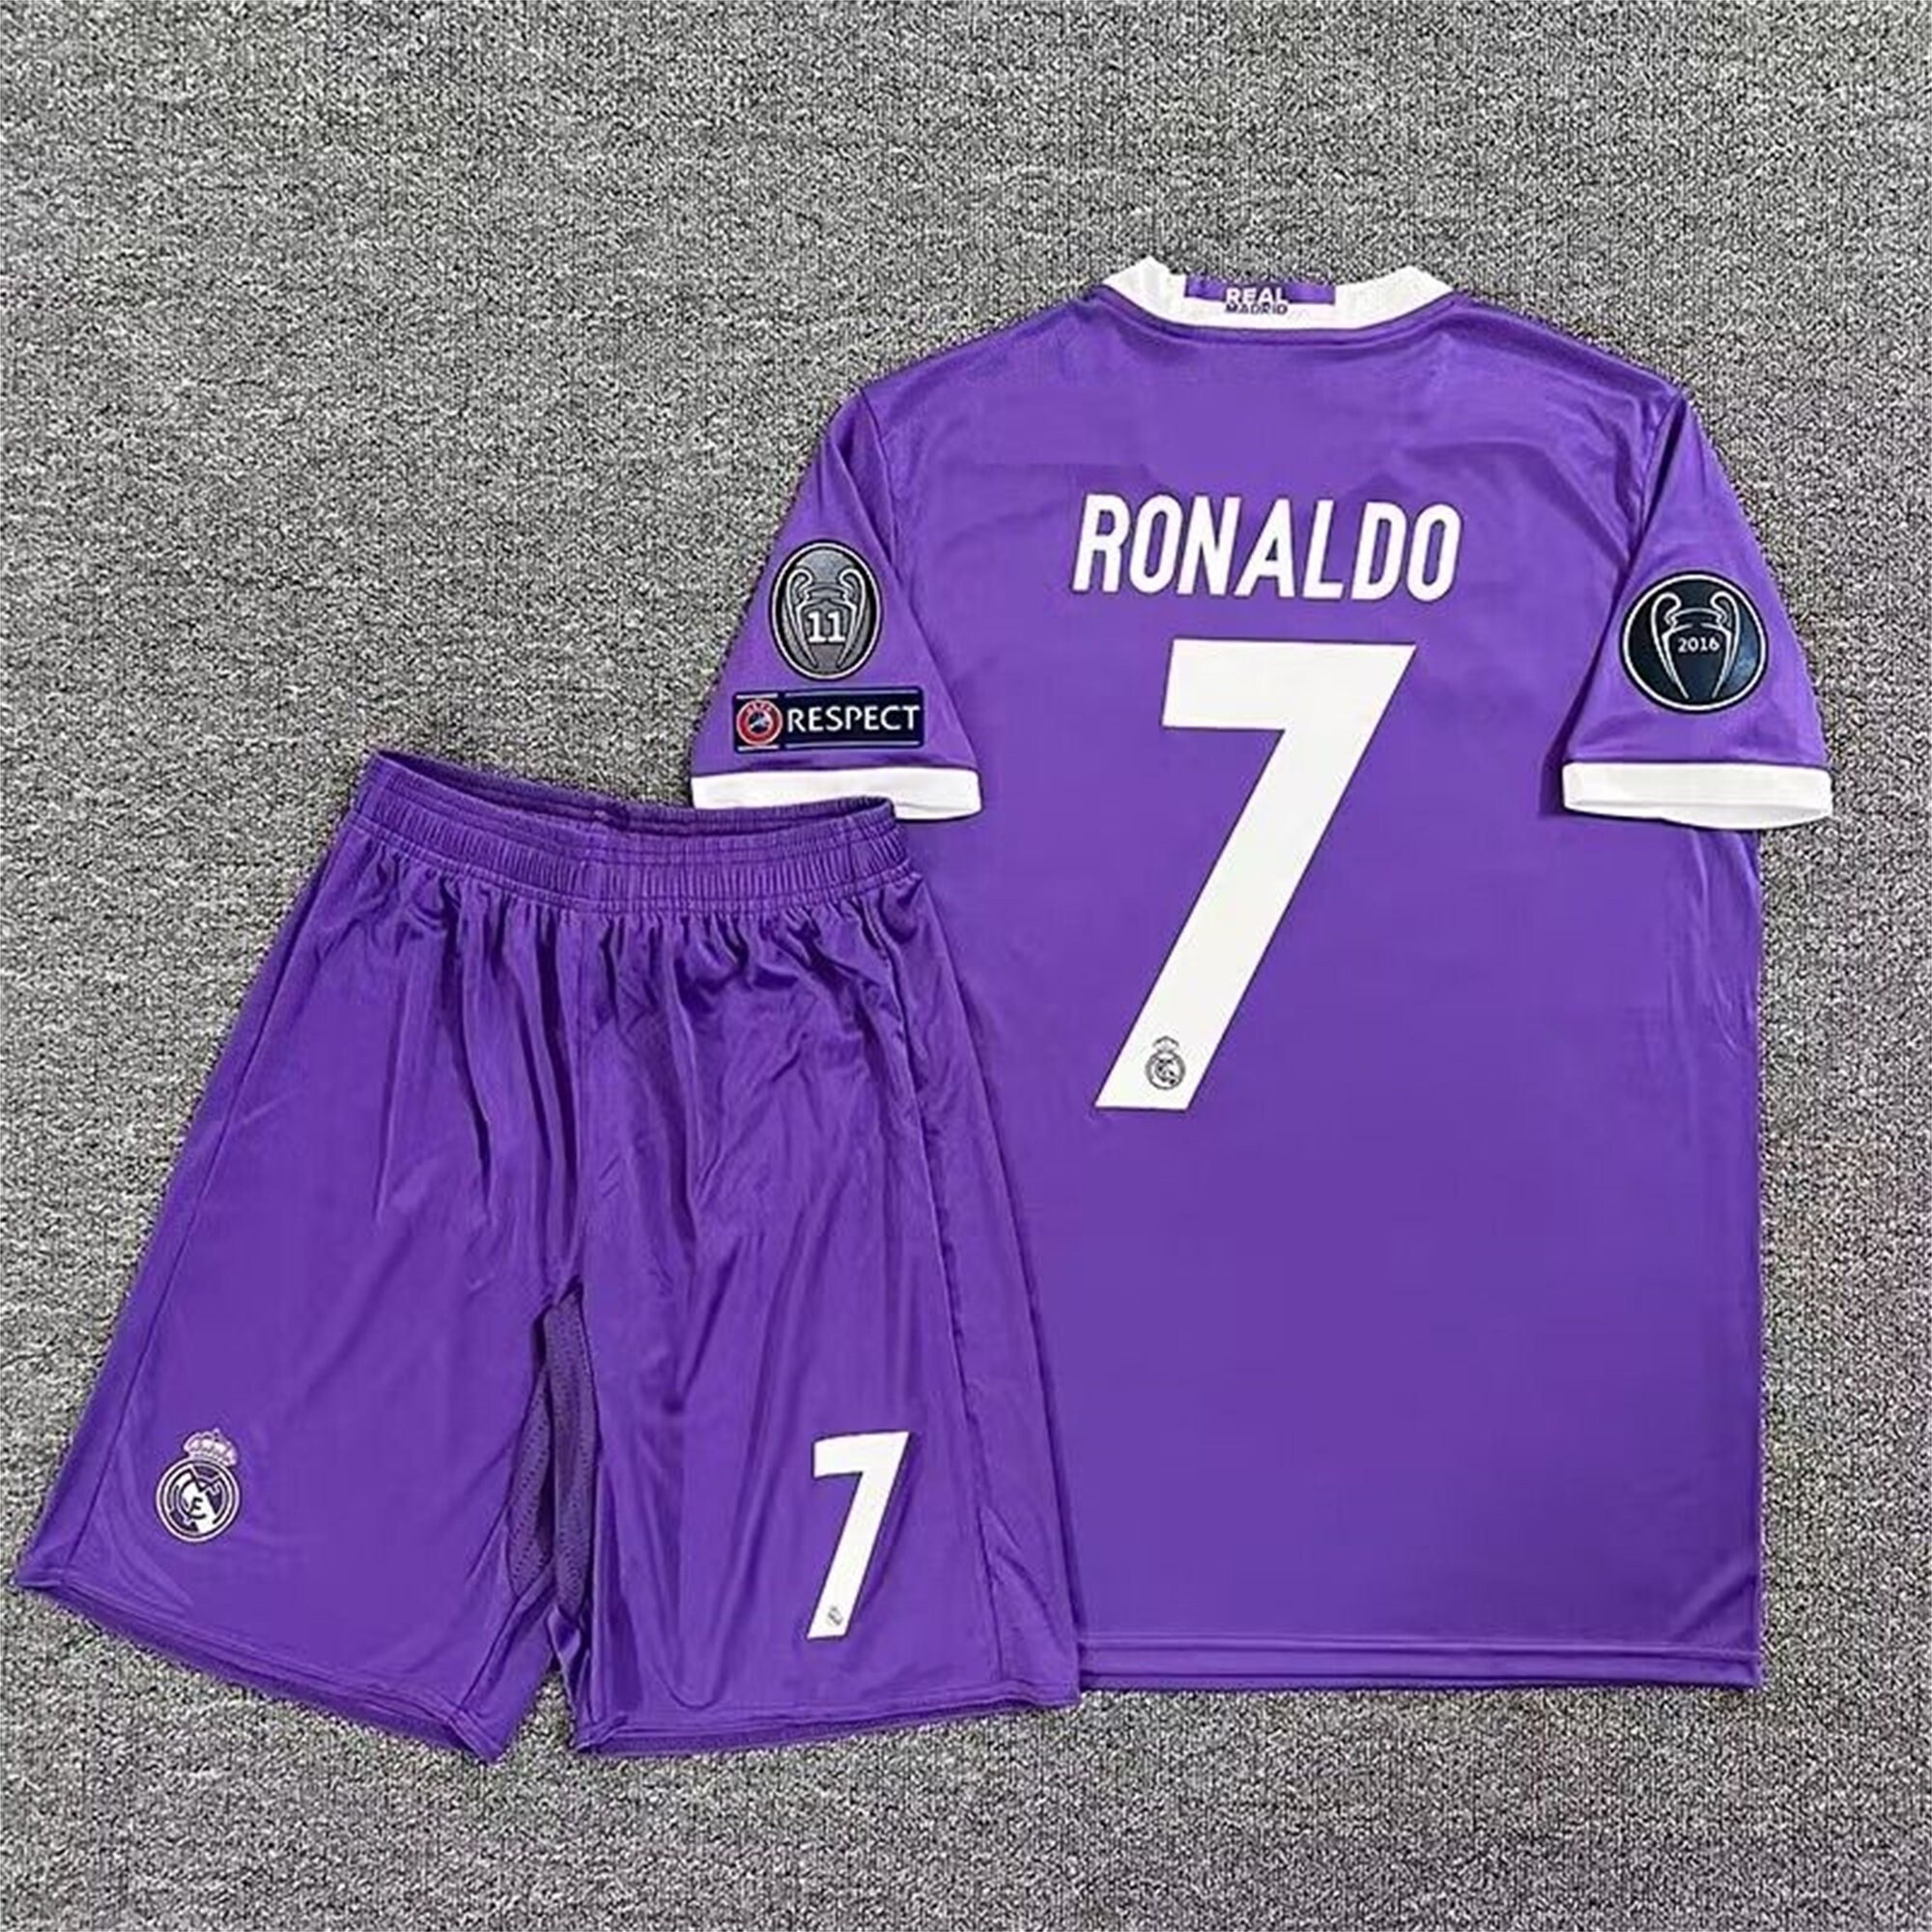 ronaldo old jersey